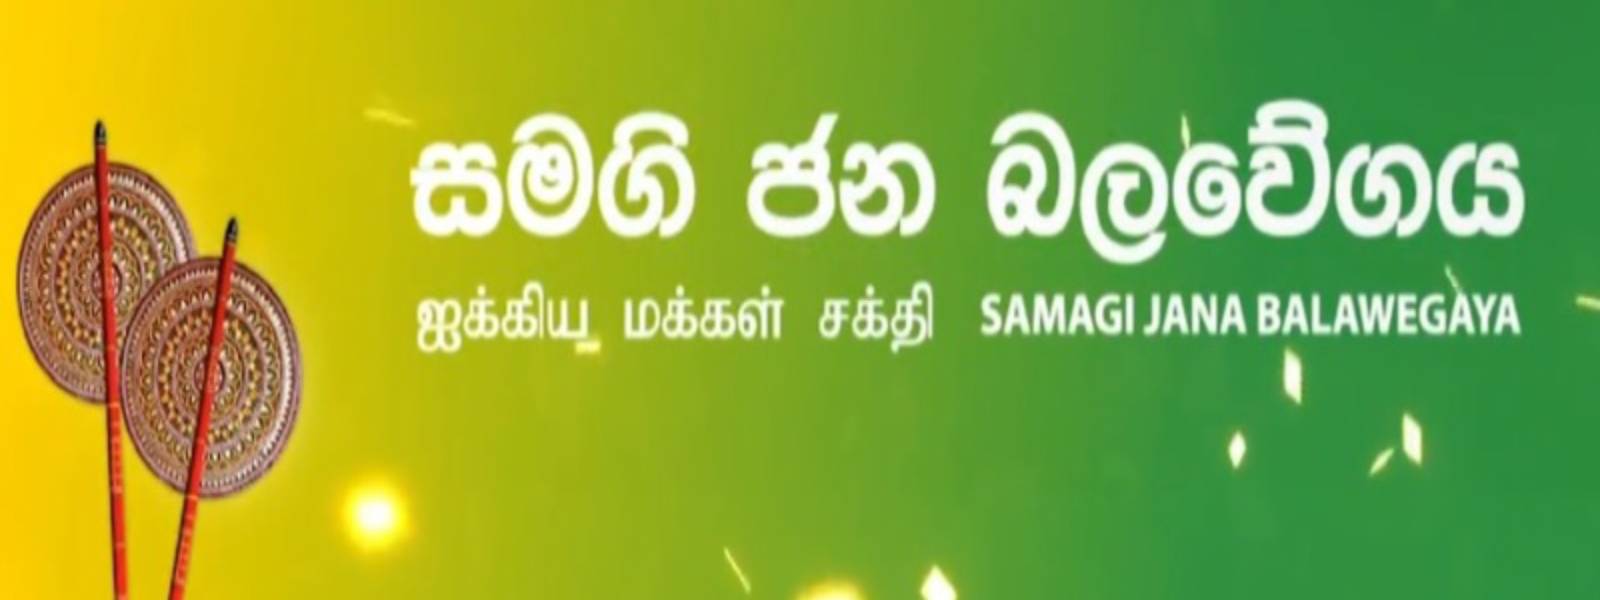 Samagi Jana Balawegaya publishes manifesto ahead of parliamentary poll